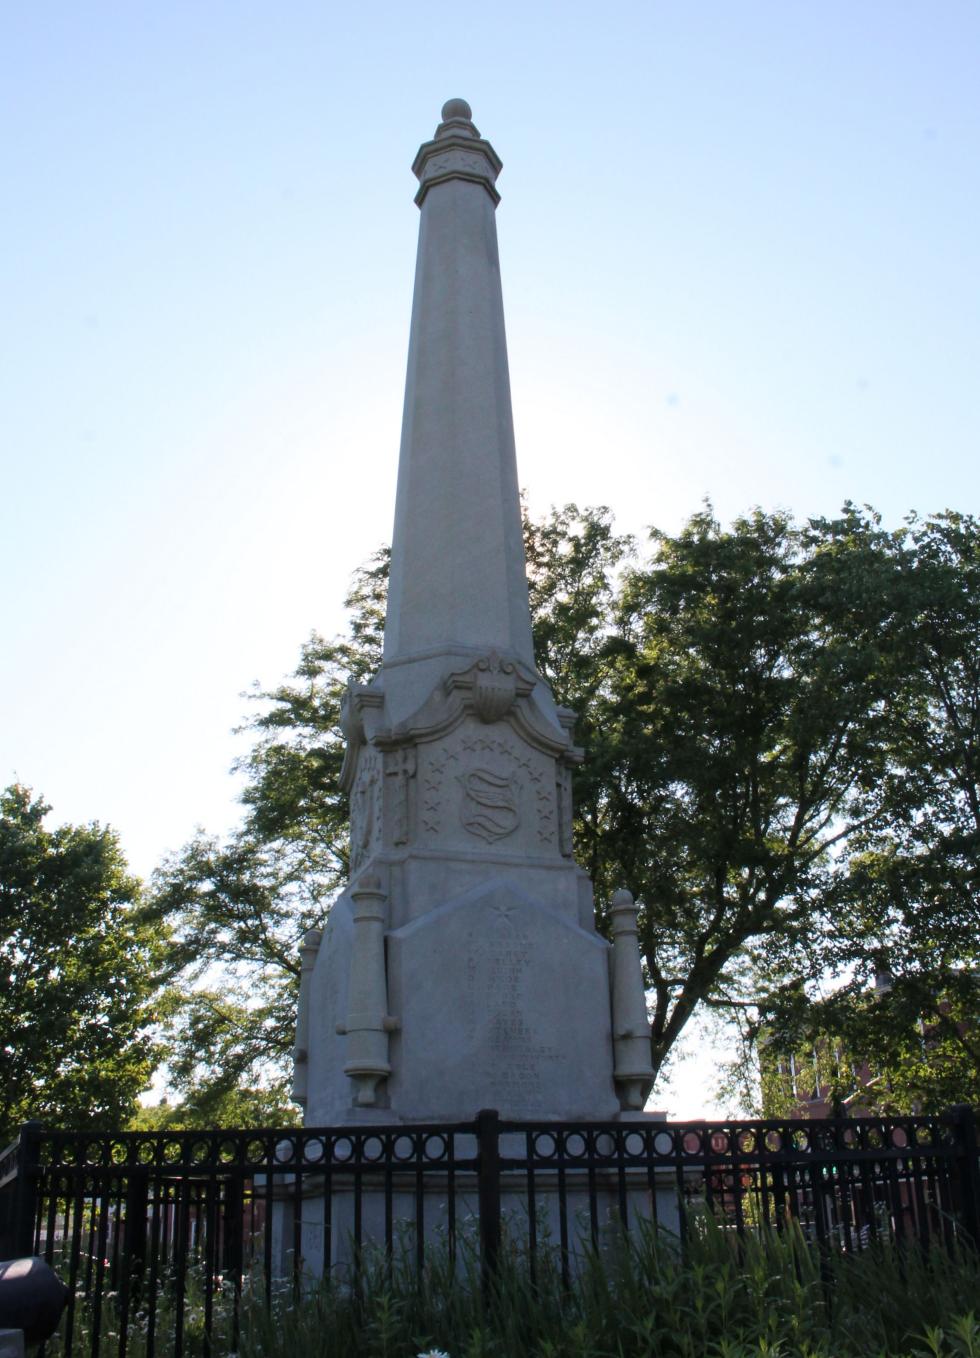 Natick Massachusetts Civil War Memorial